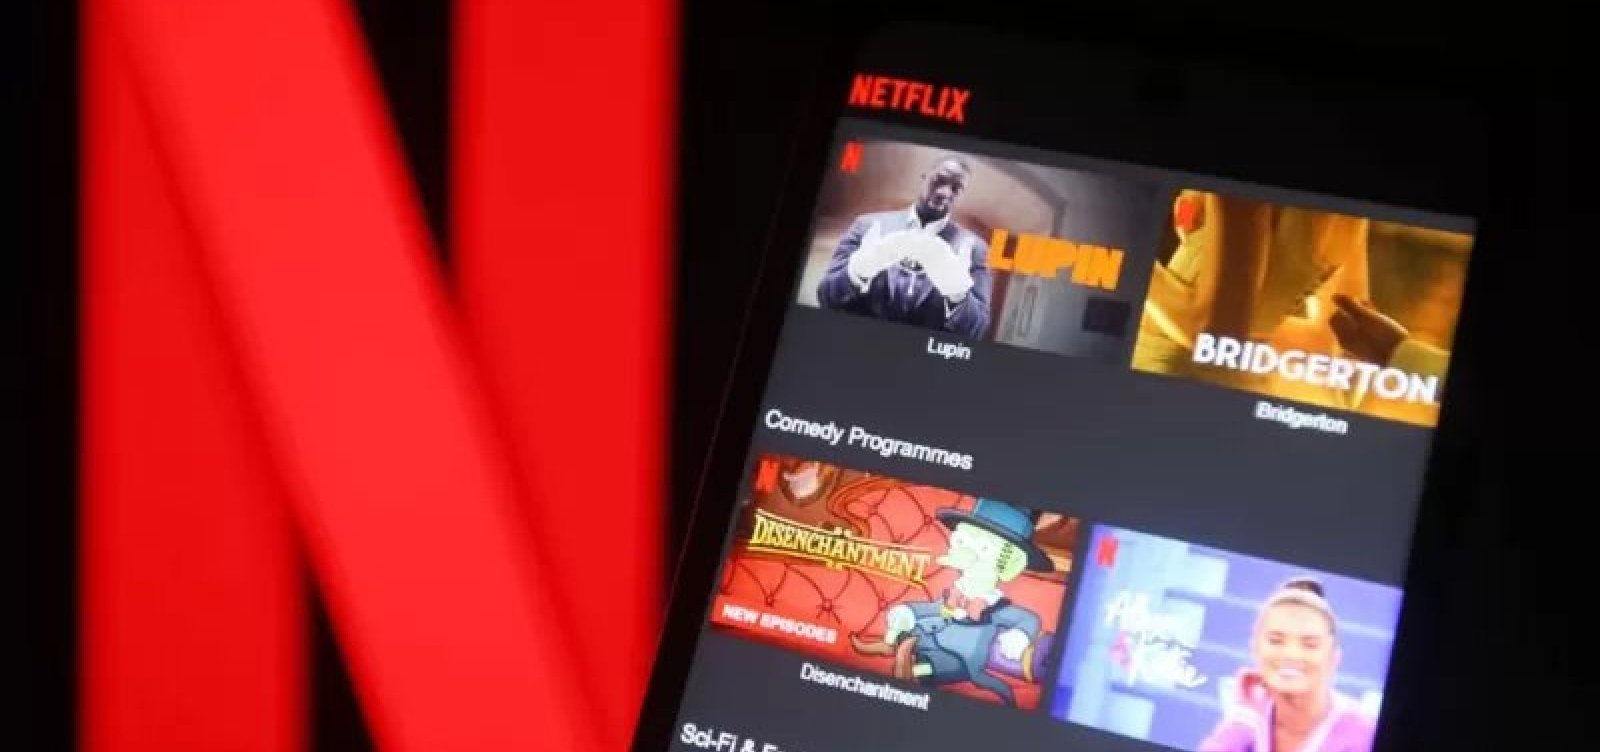 Procon-SP vai notificar Netflix por cobrança adicional